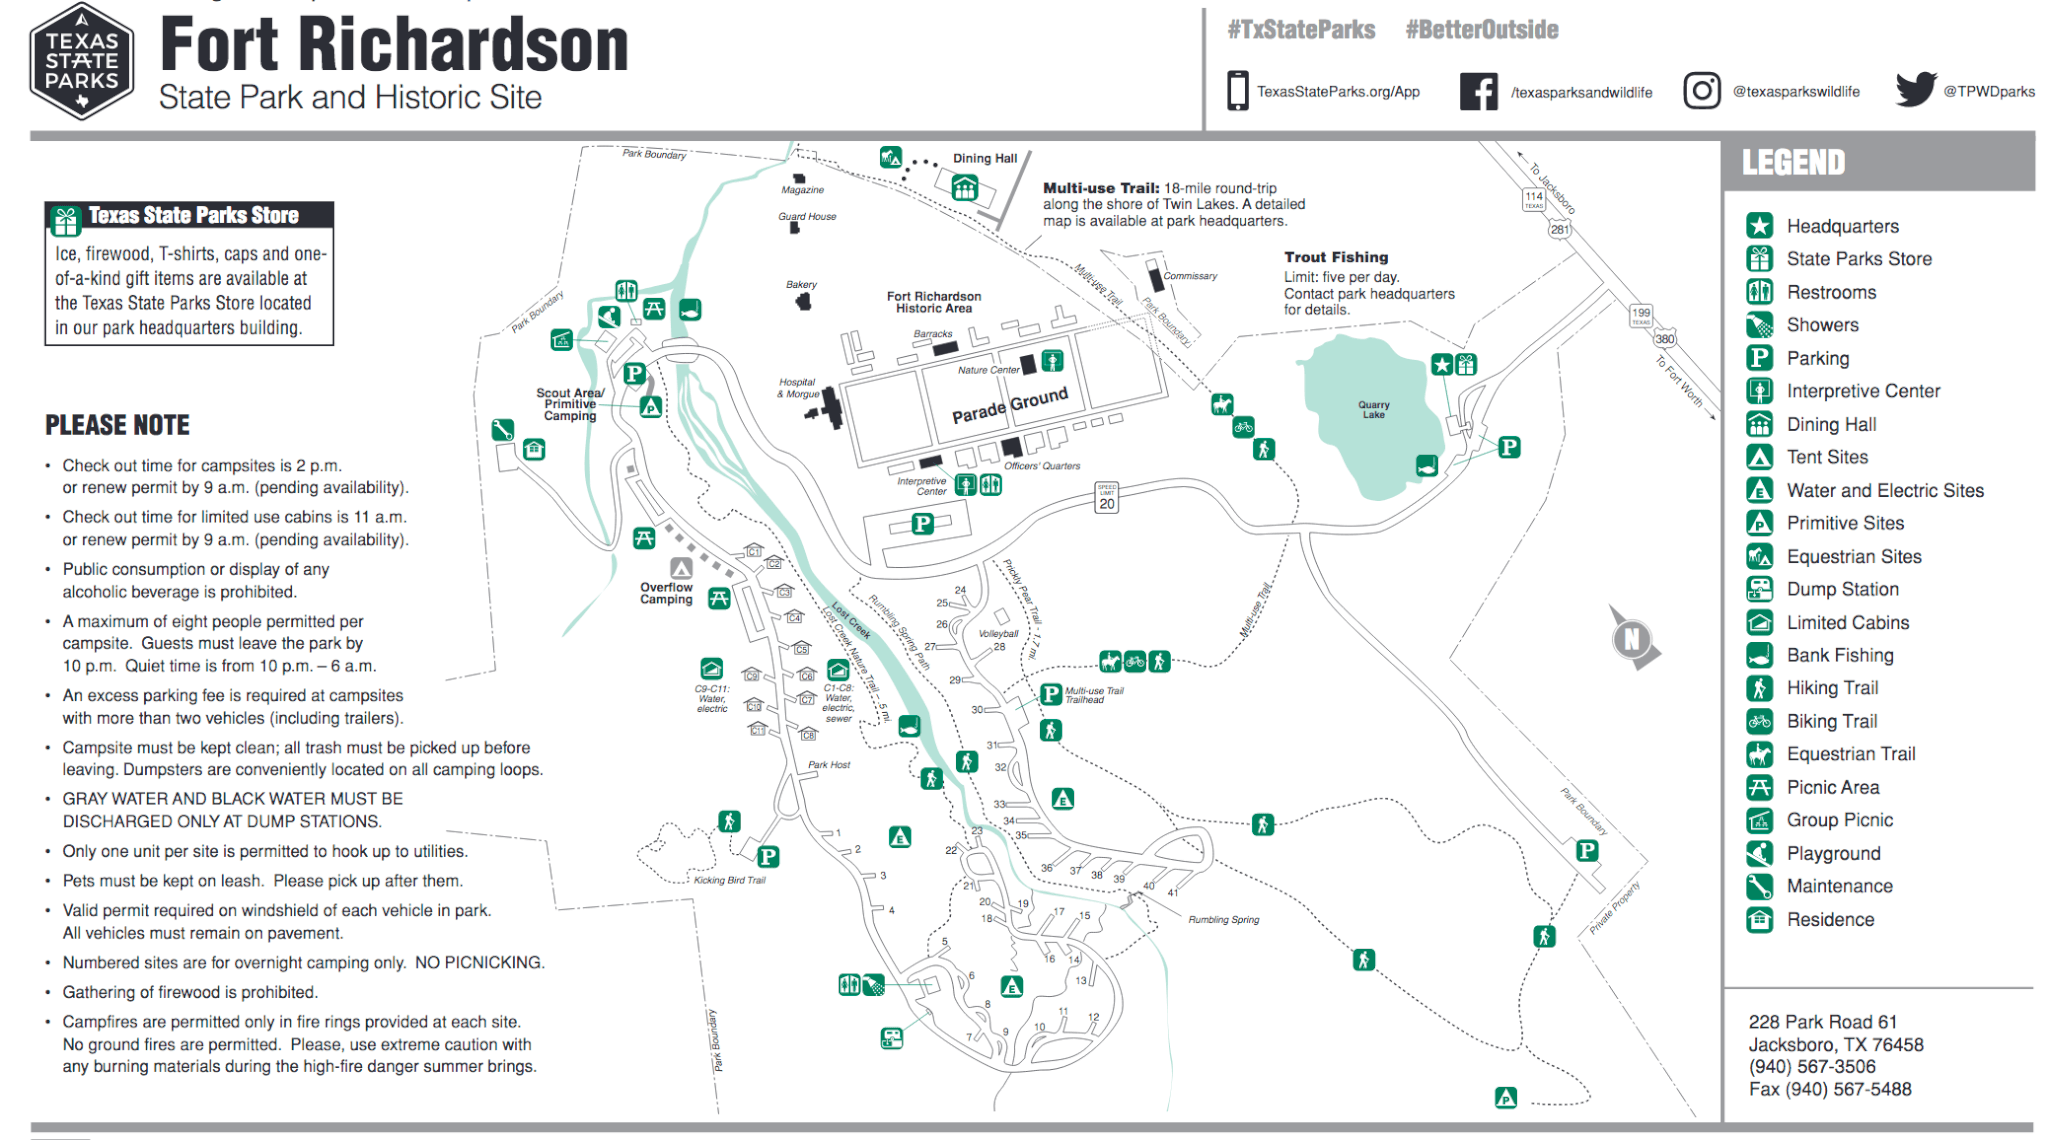 Fort Richardson State Park Map